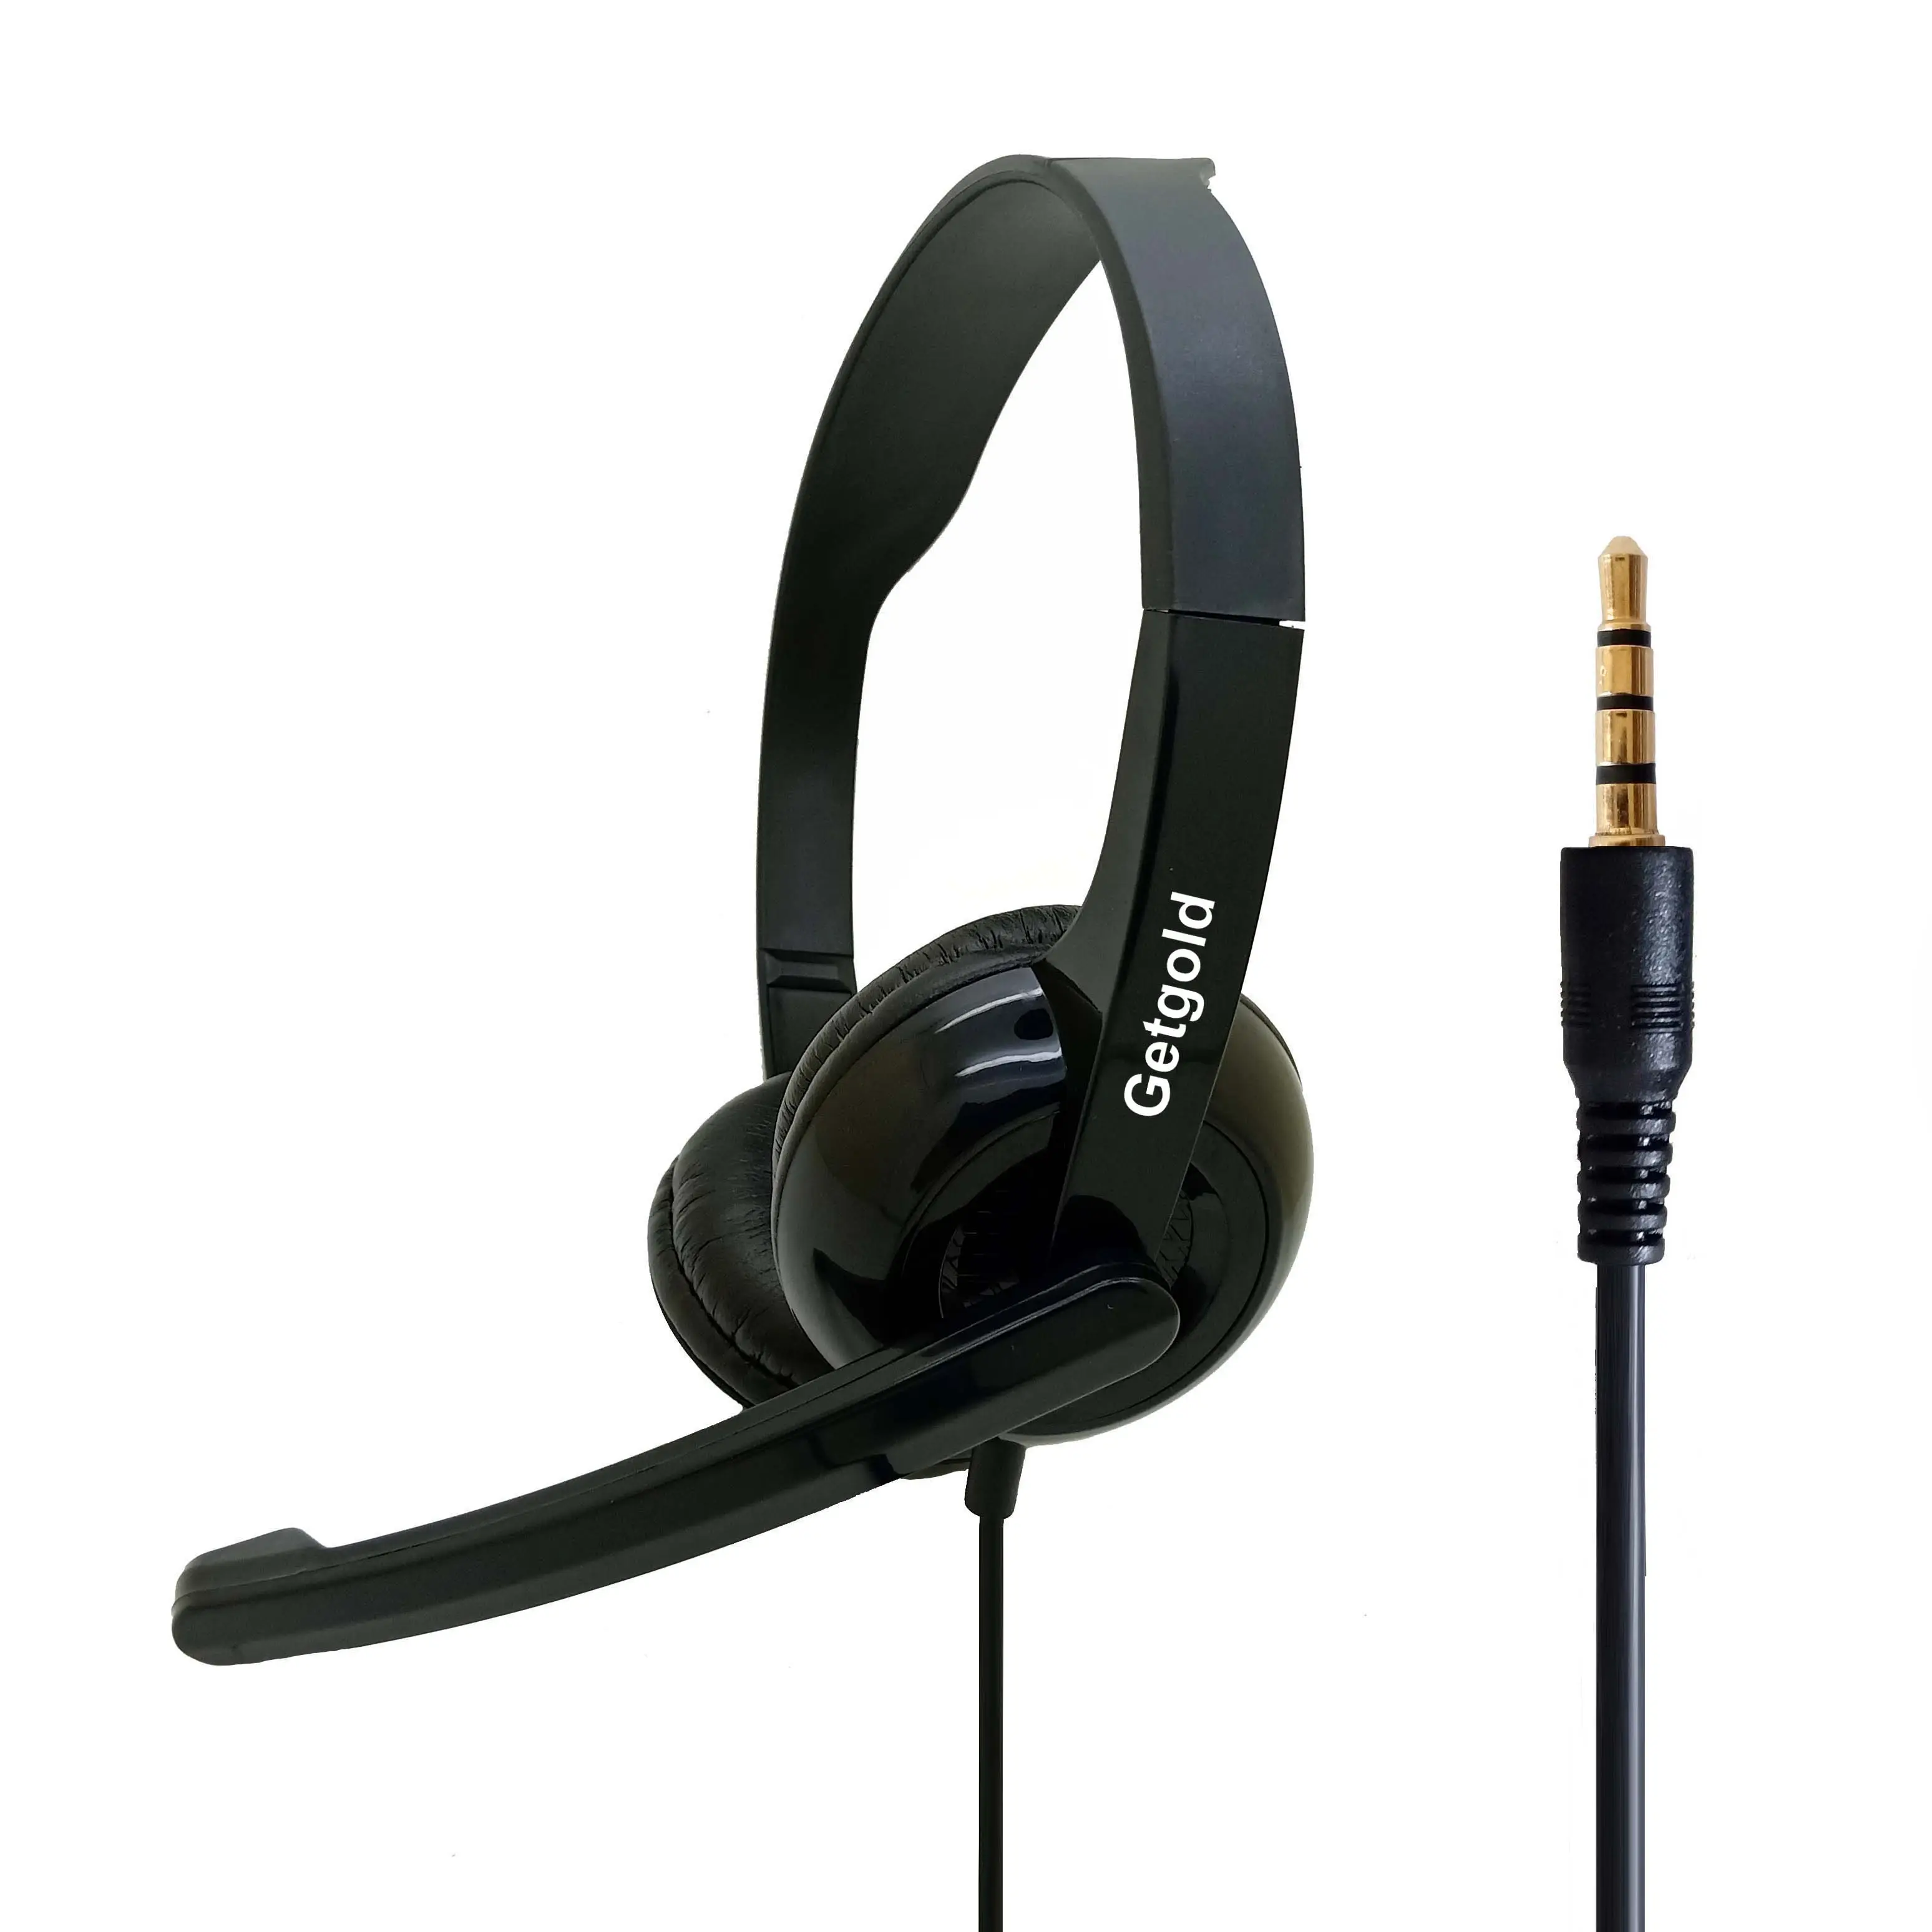 Getgold Premium Quality Classroom Headphones with Microphone Wired Studio over Ear Headphones Class Set Earphones